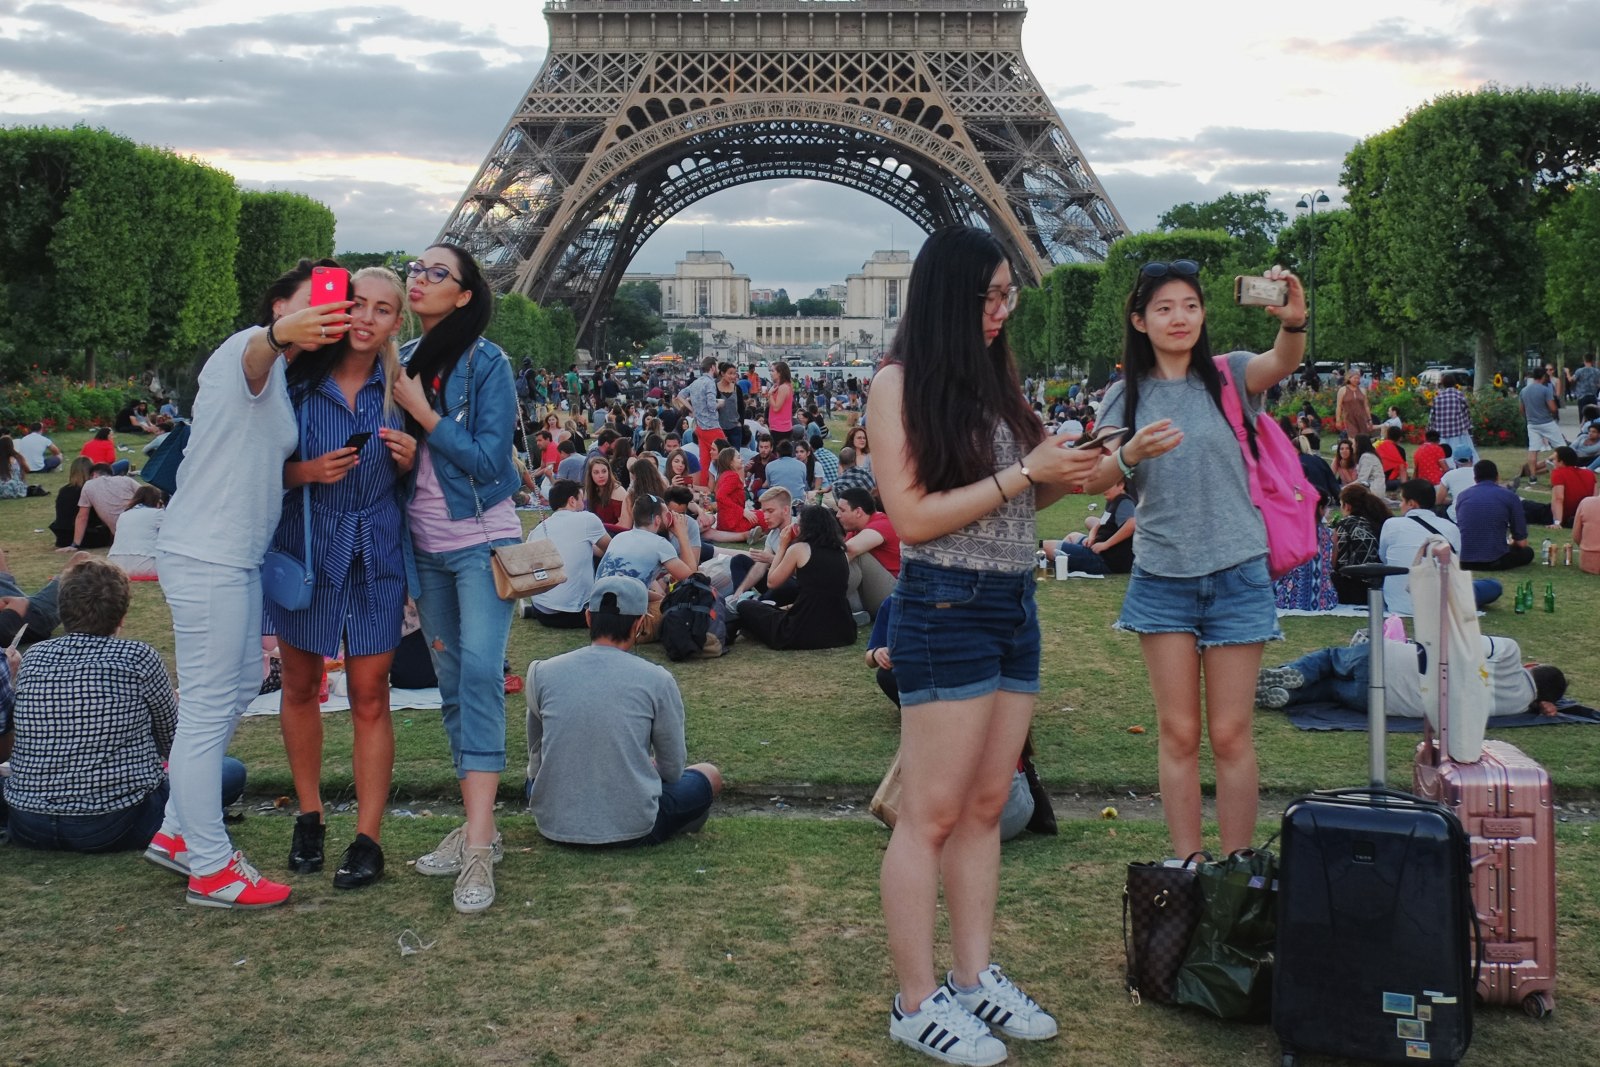 Summer selfie time Champ de Mars, Eiffel Tower, Paris. Street style travel photography by Kent Johnson.